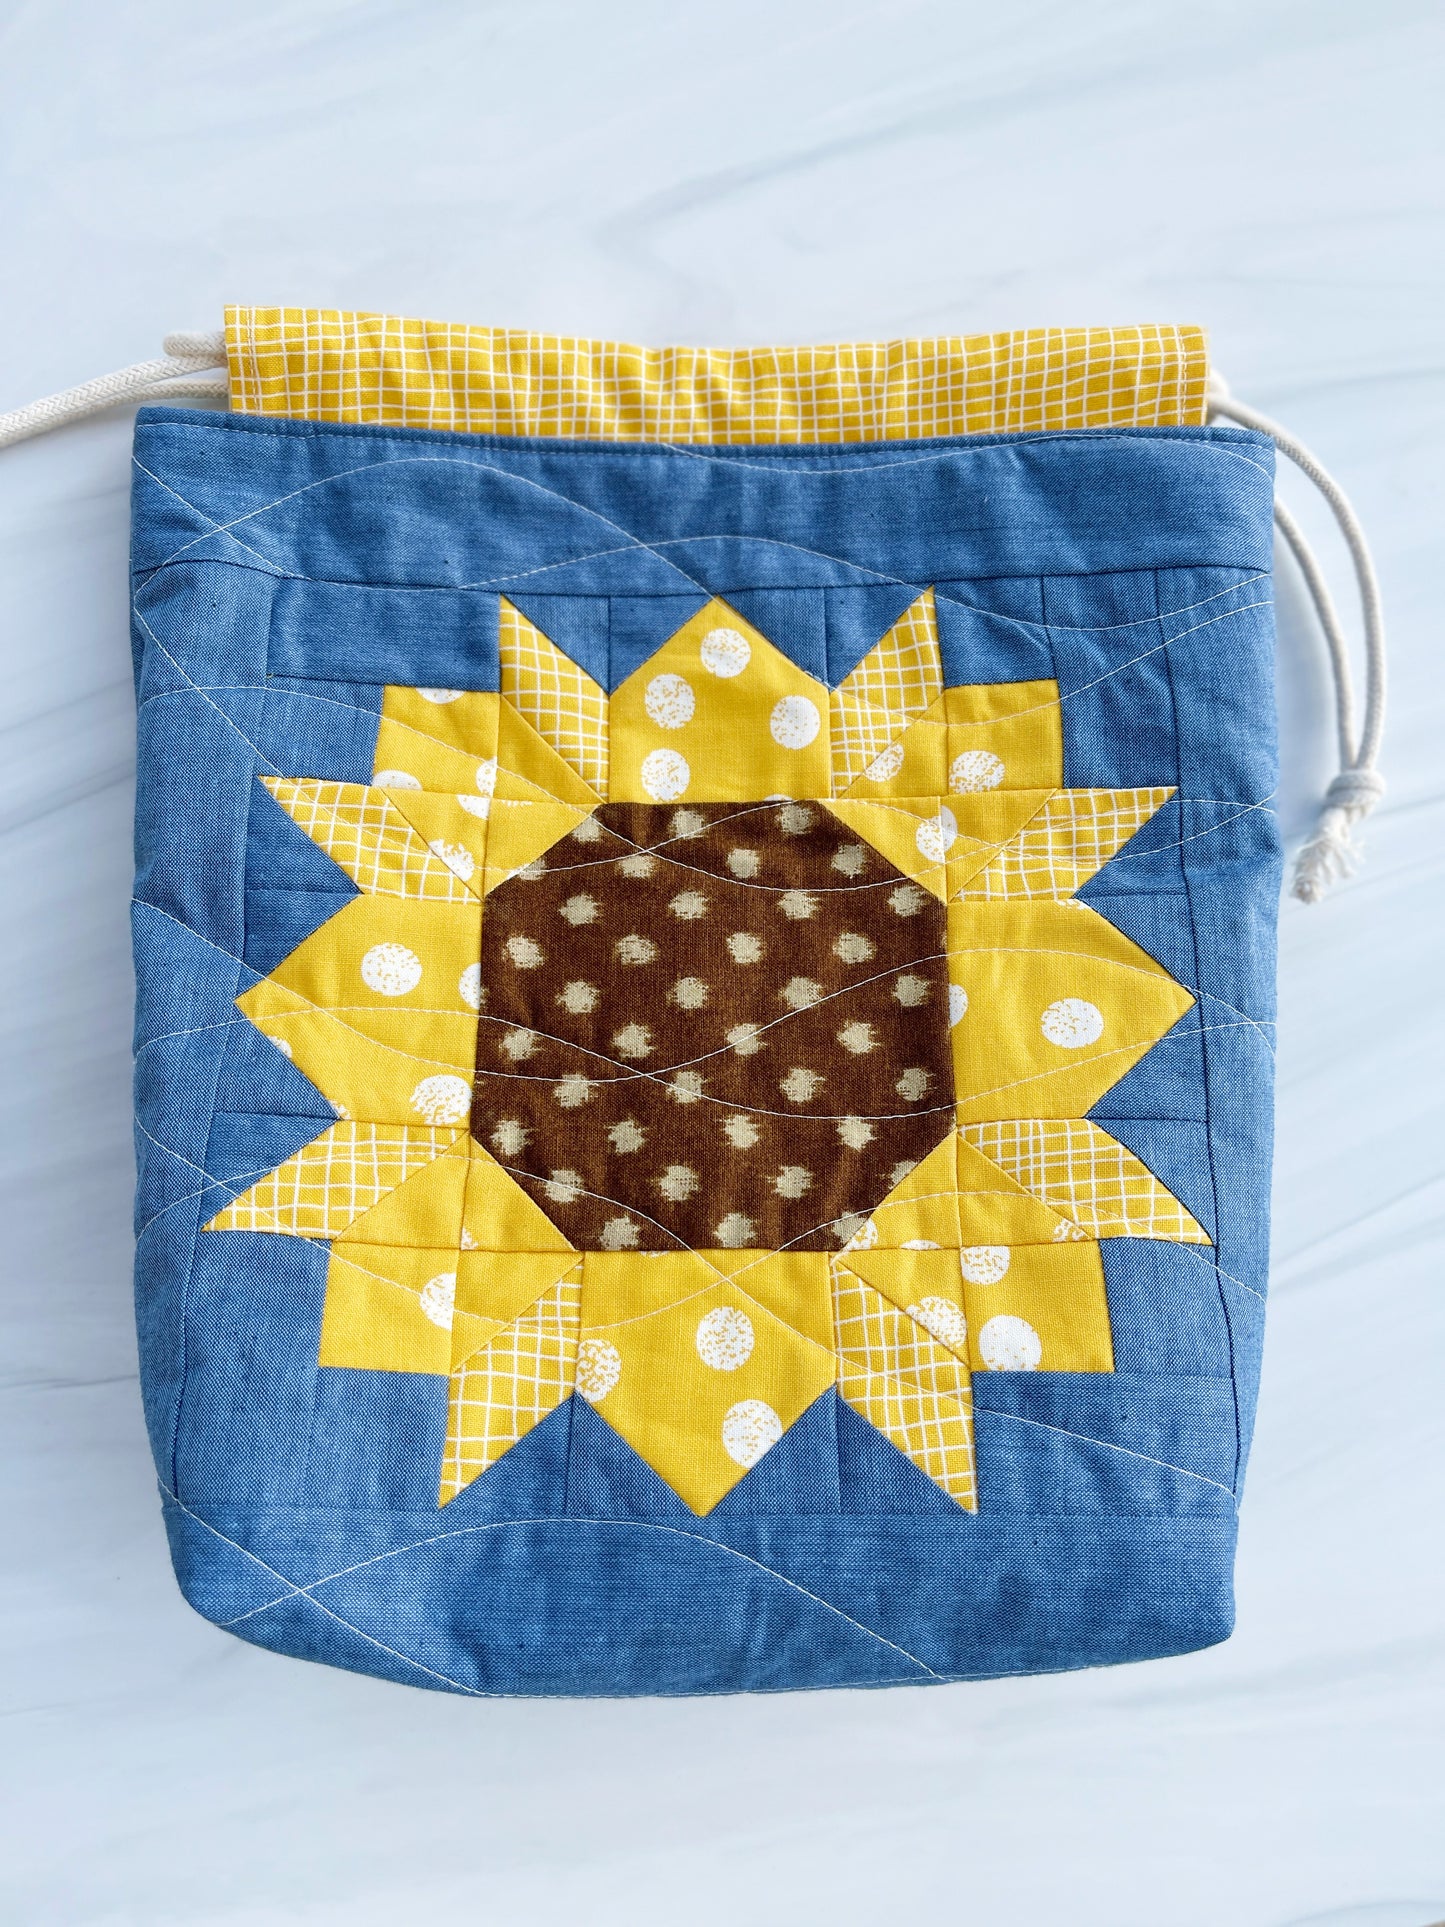 Mini Sunflower Drawstring Bag Pattern - PDF